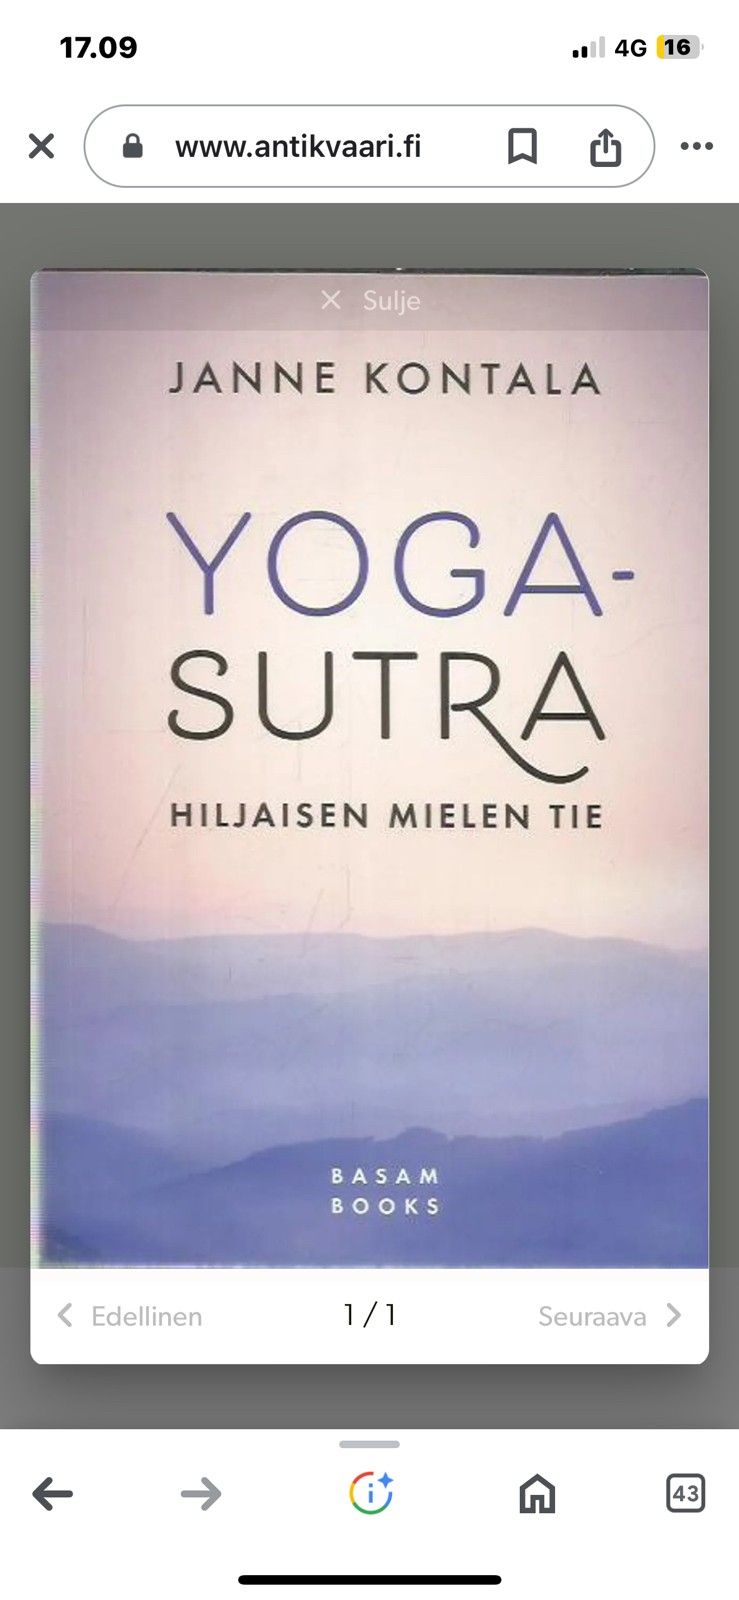 Ostan Janne Kontalan Yoga Sutra -hiljaisen mielen tie kirjan.